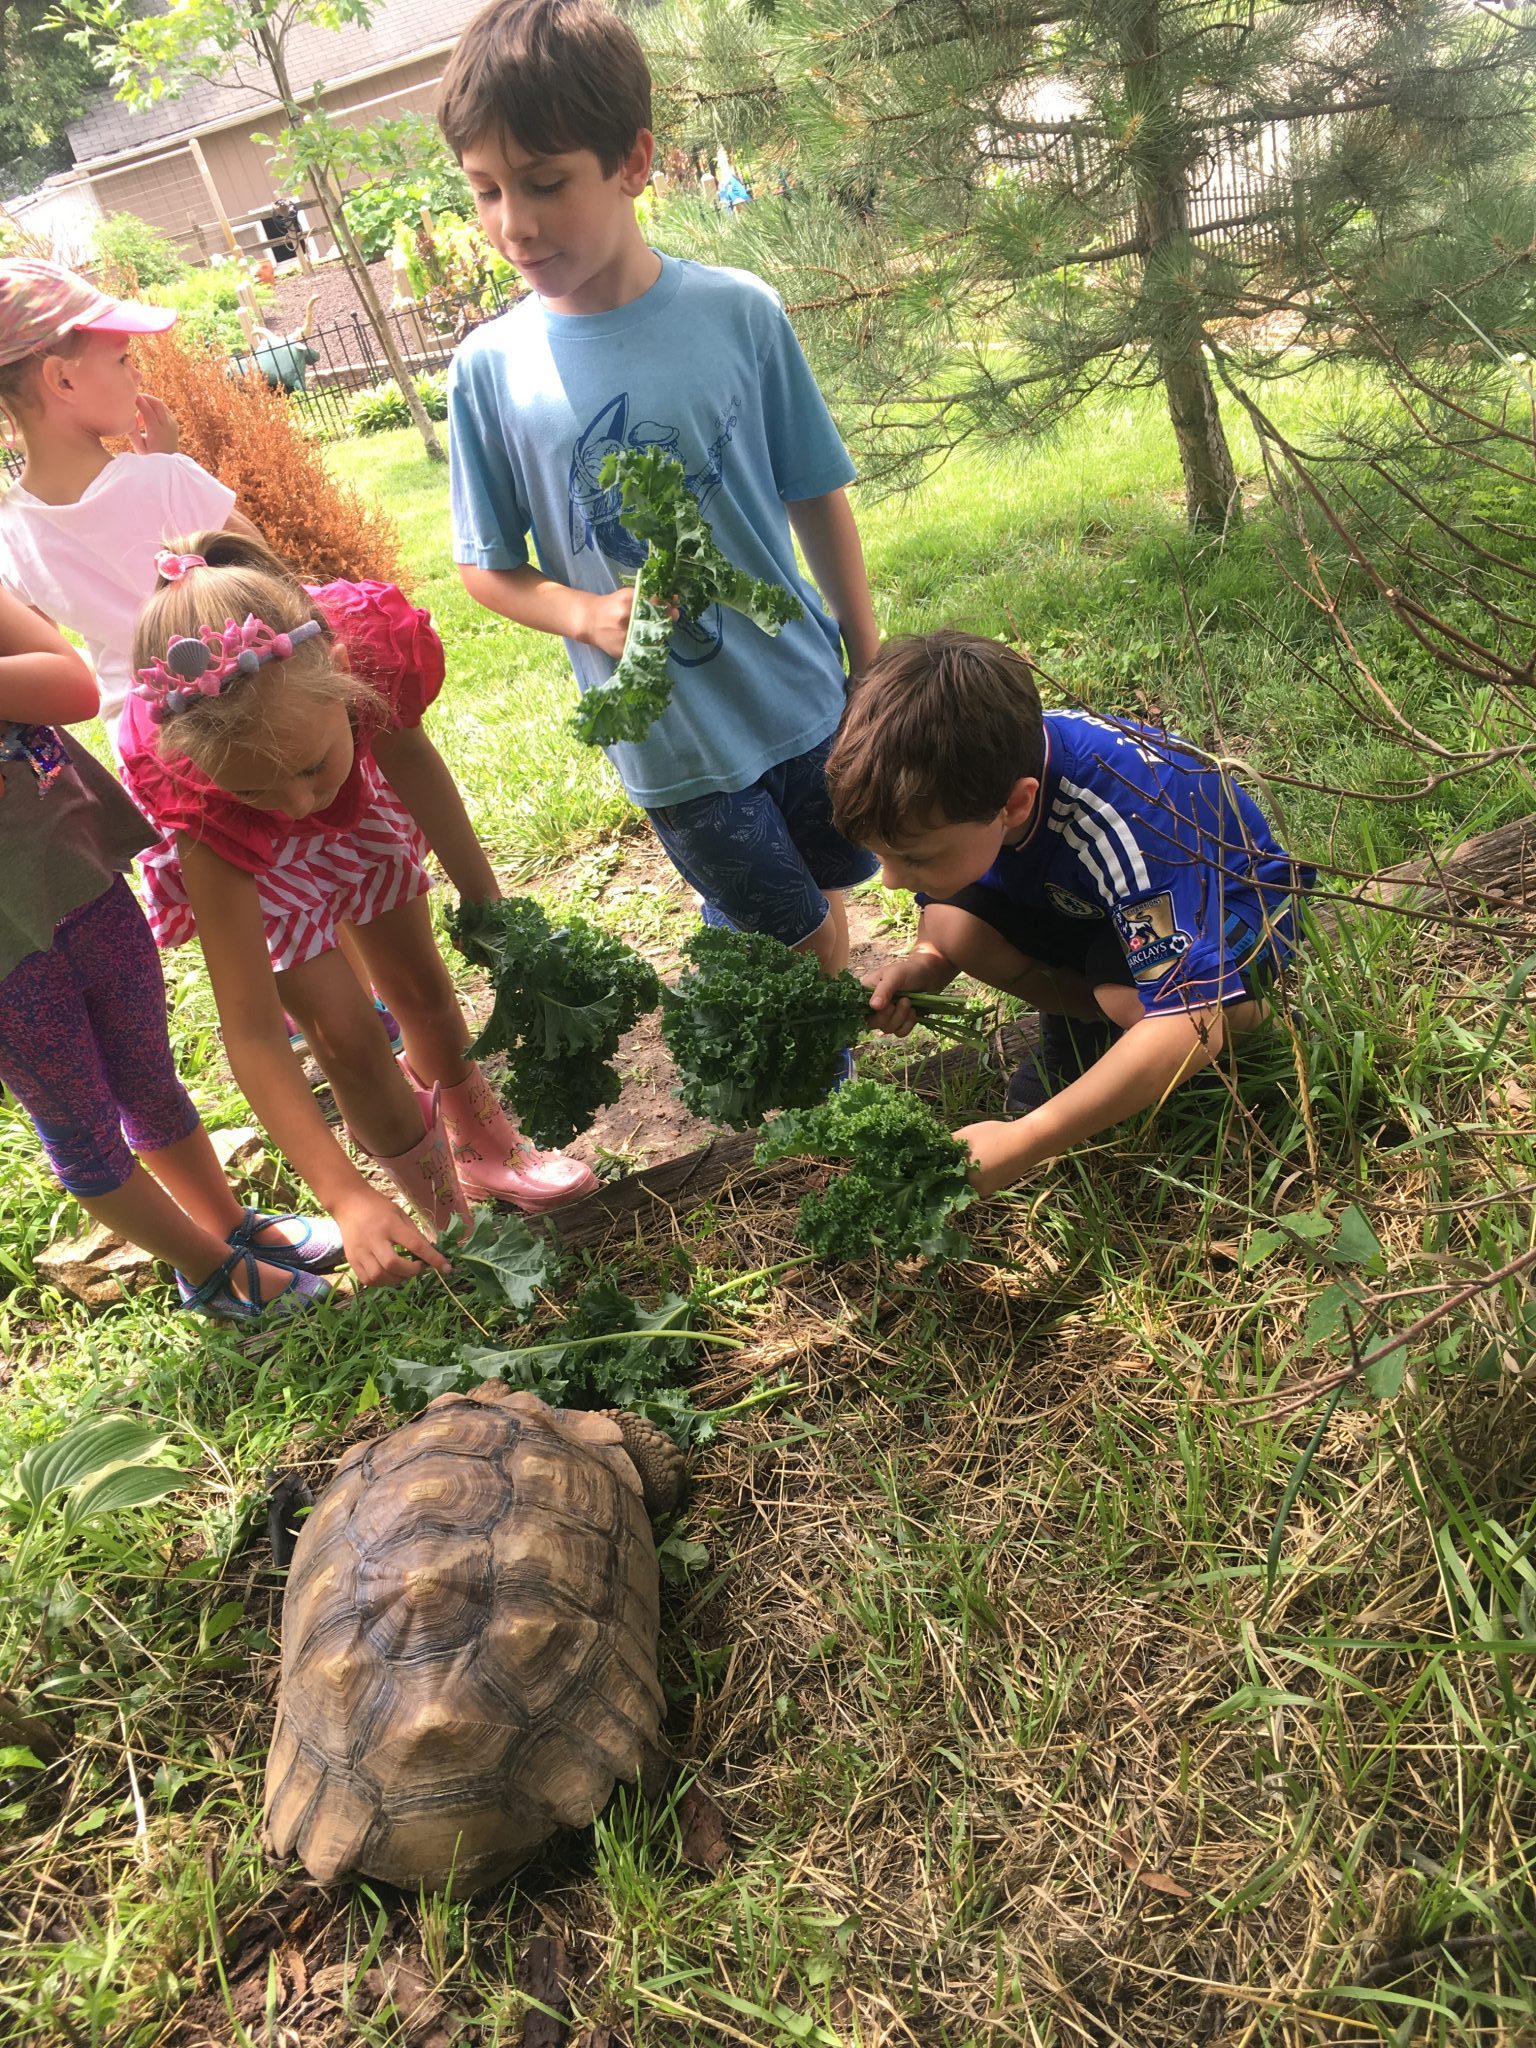 5 kids feeding a turtle.